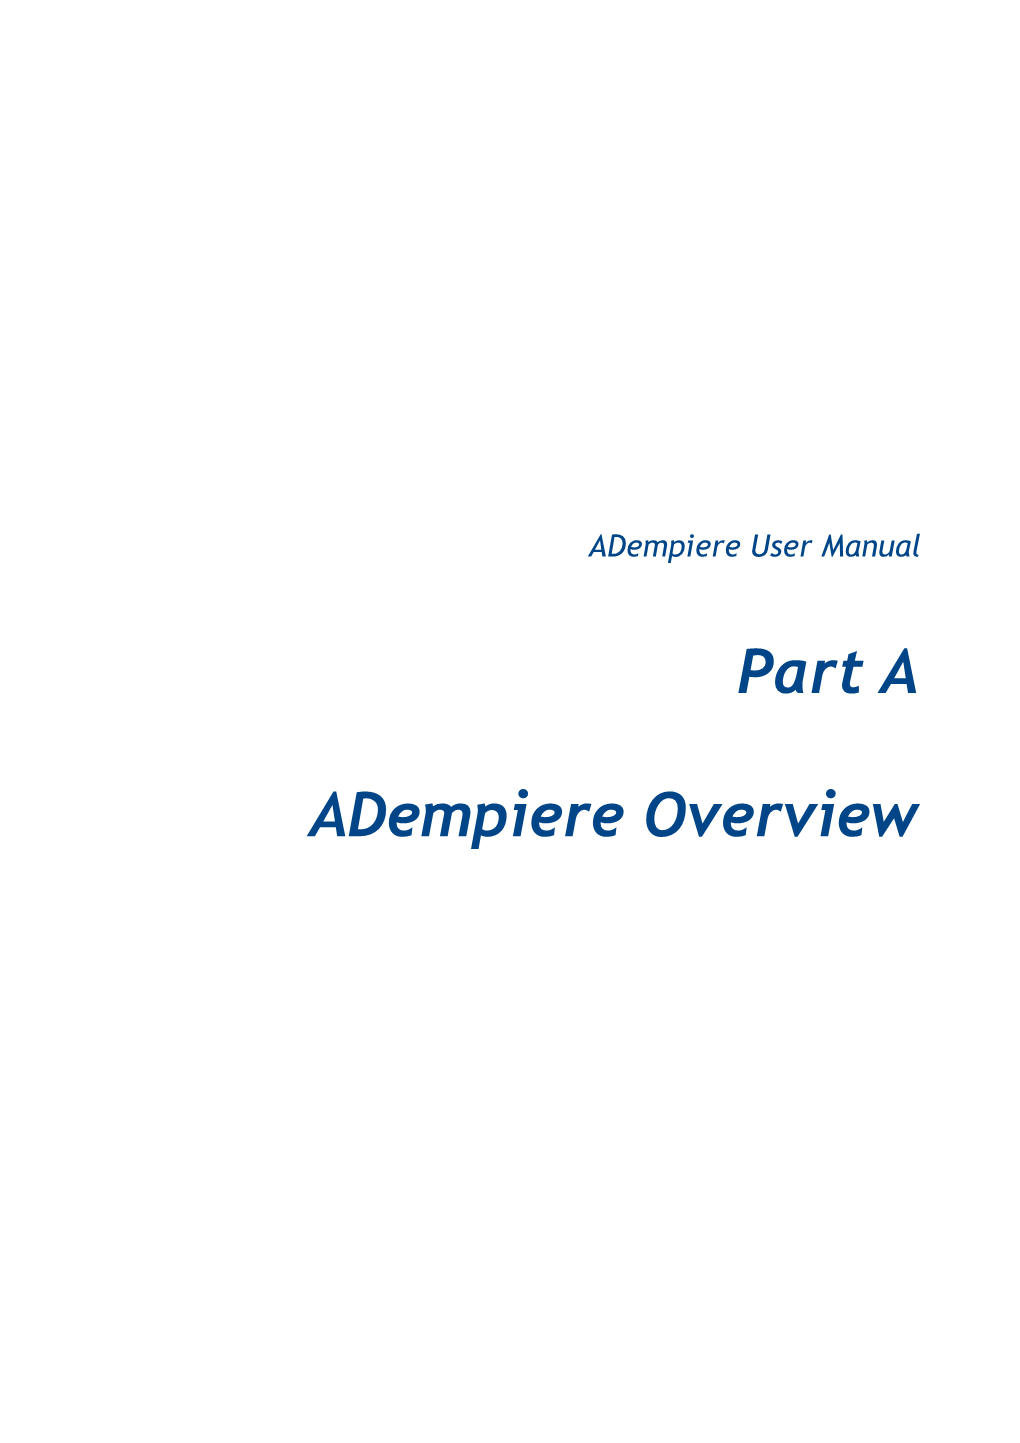 Part a Adempiere Overview